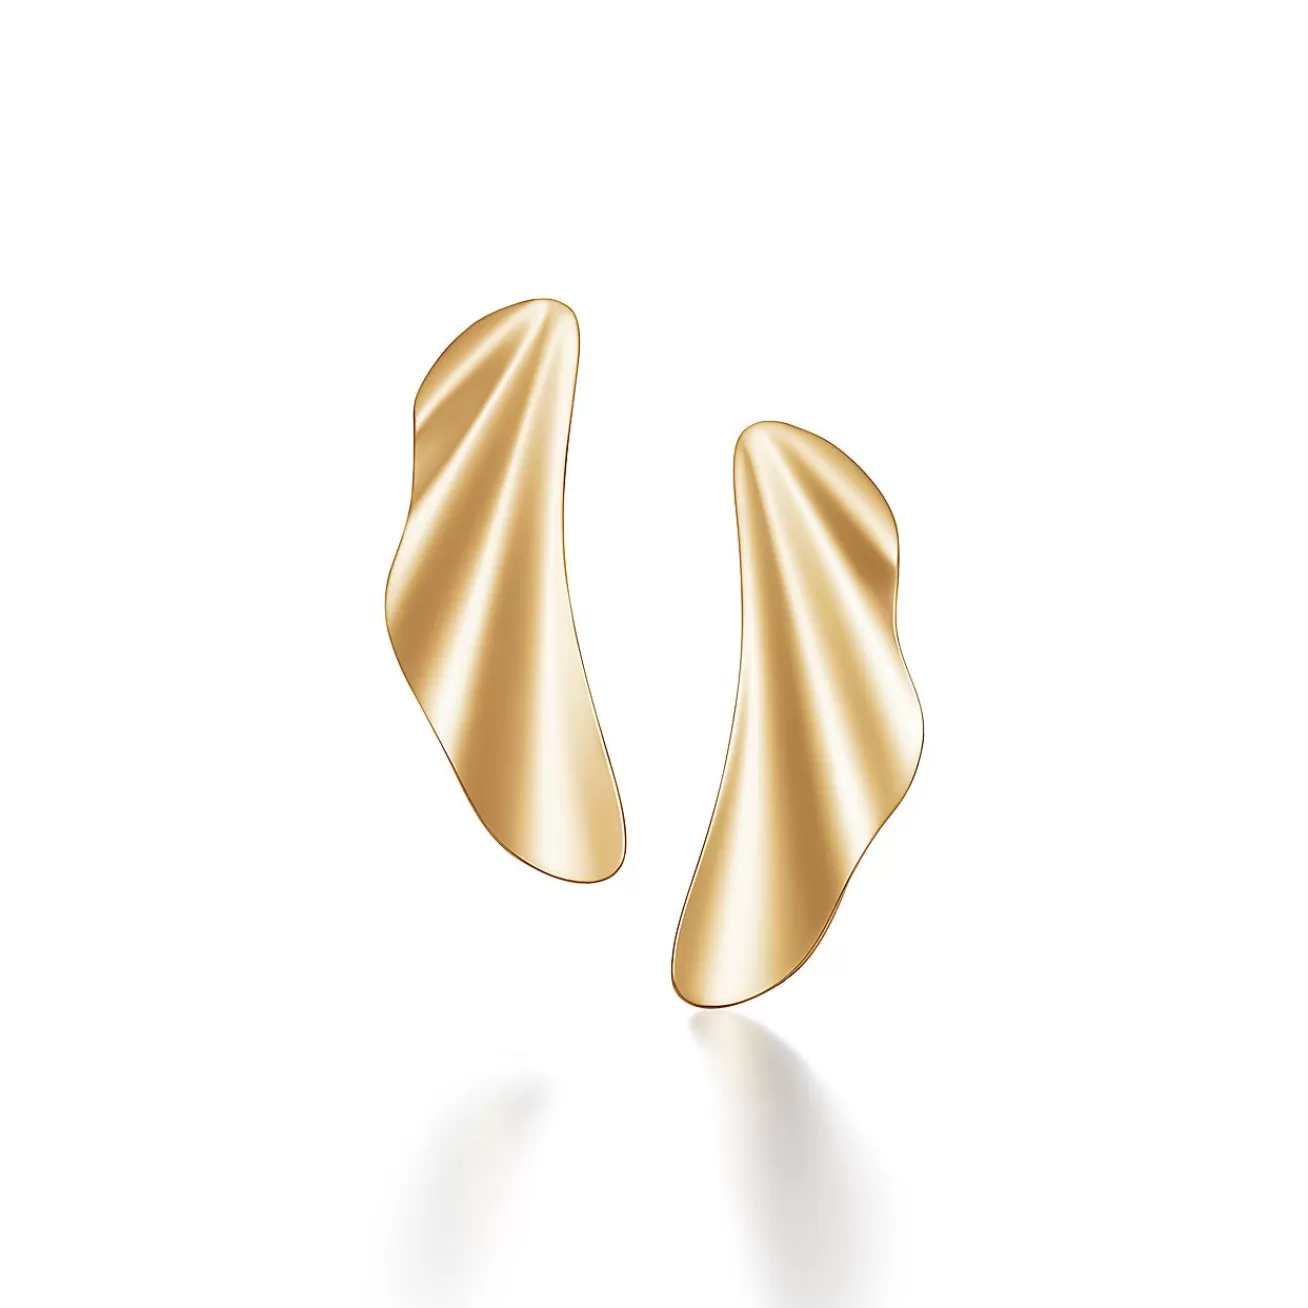 Tiffany & Co. Elsa Peretti® High Tide earrings in 18k gold, small. | ^ Earrings | Gifts for Her